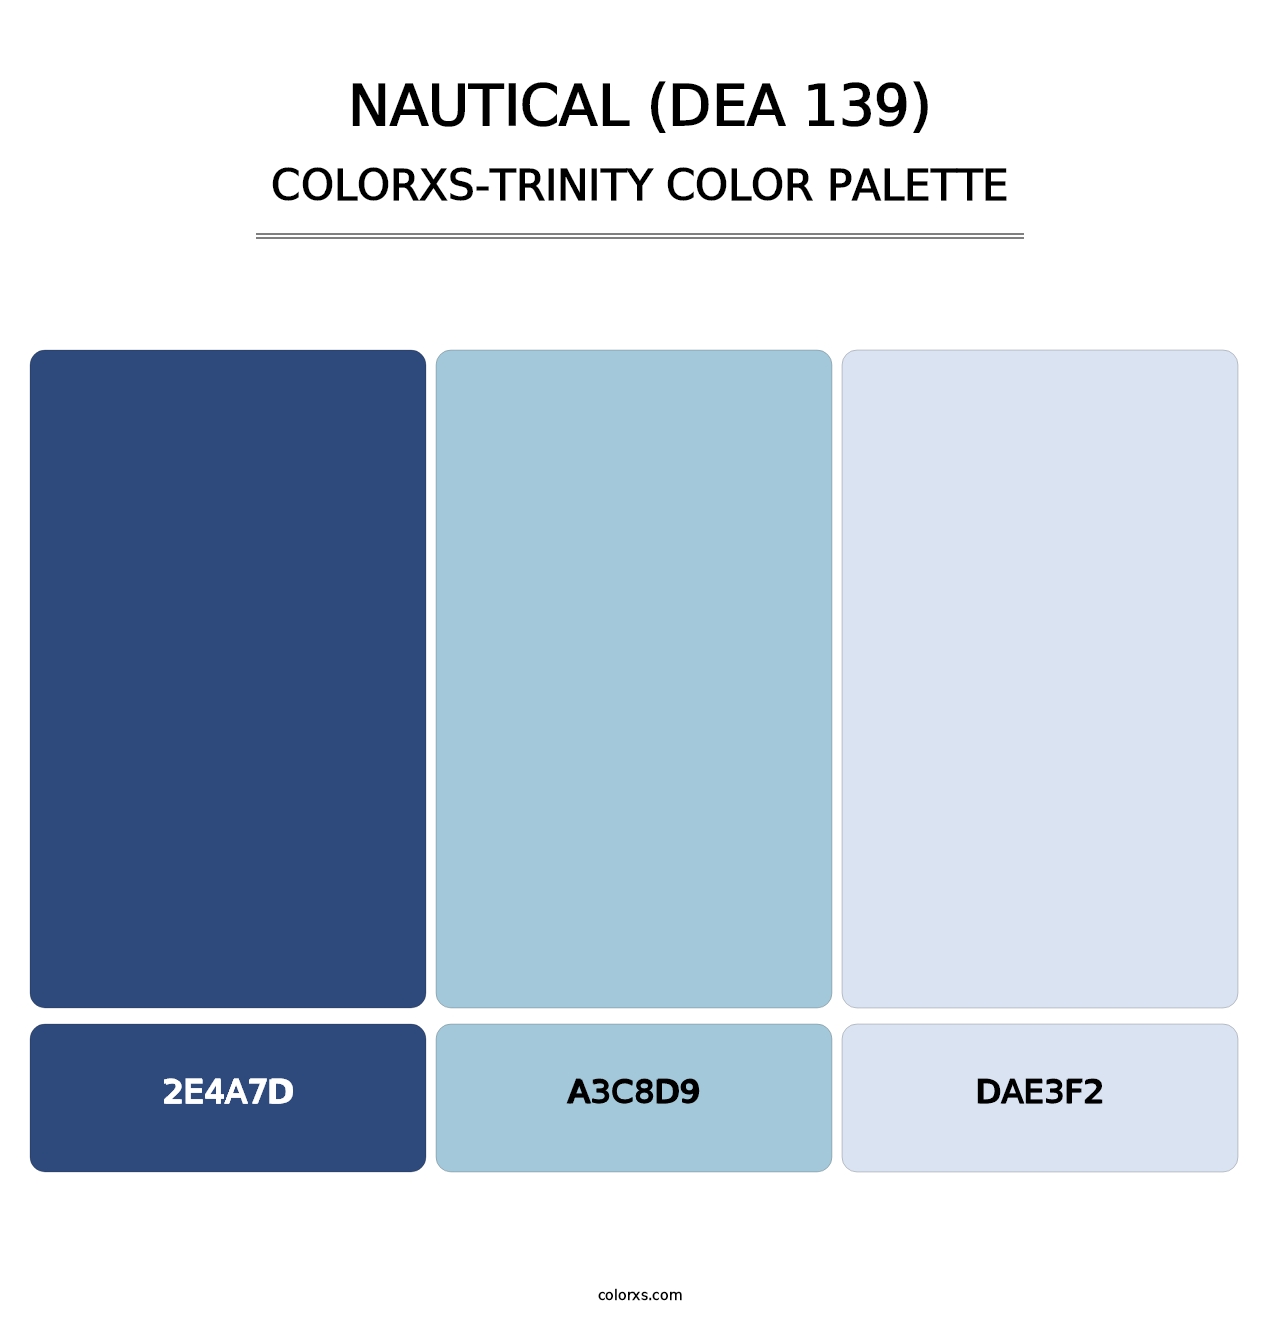 Nautical (DEA 139) - Colorxs Trinity Palette